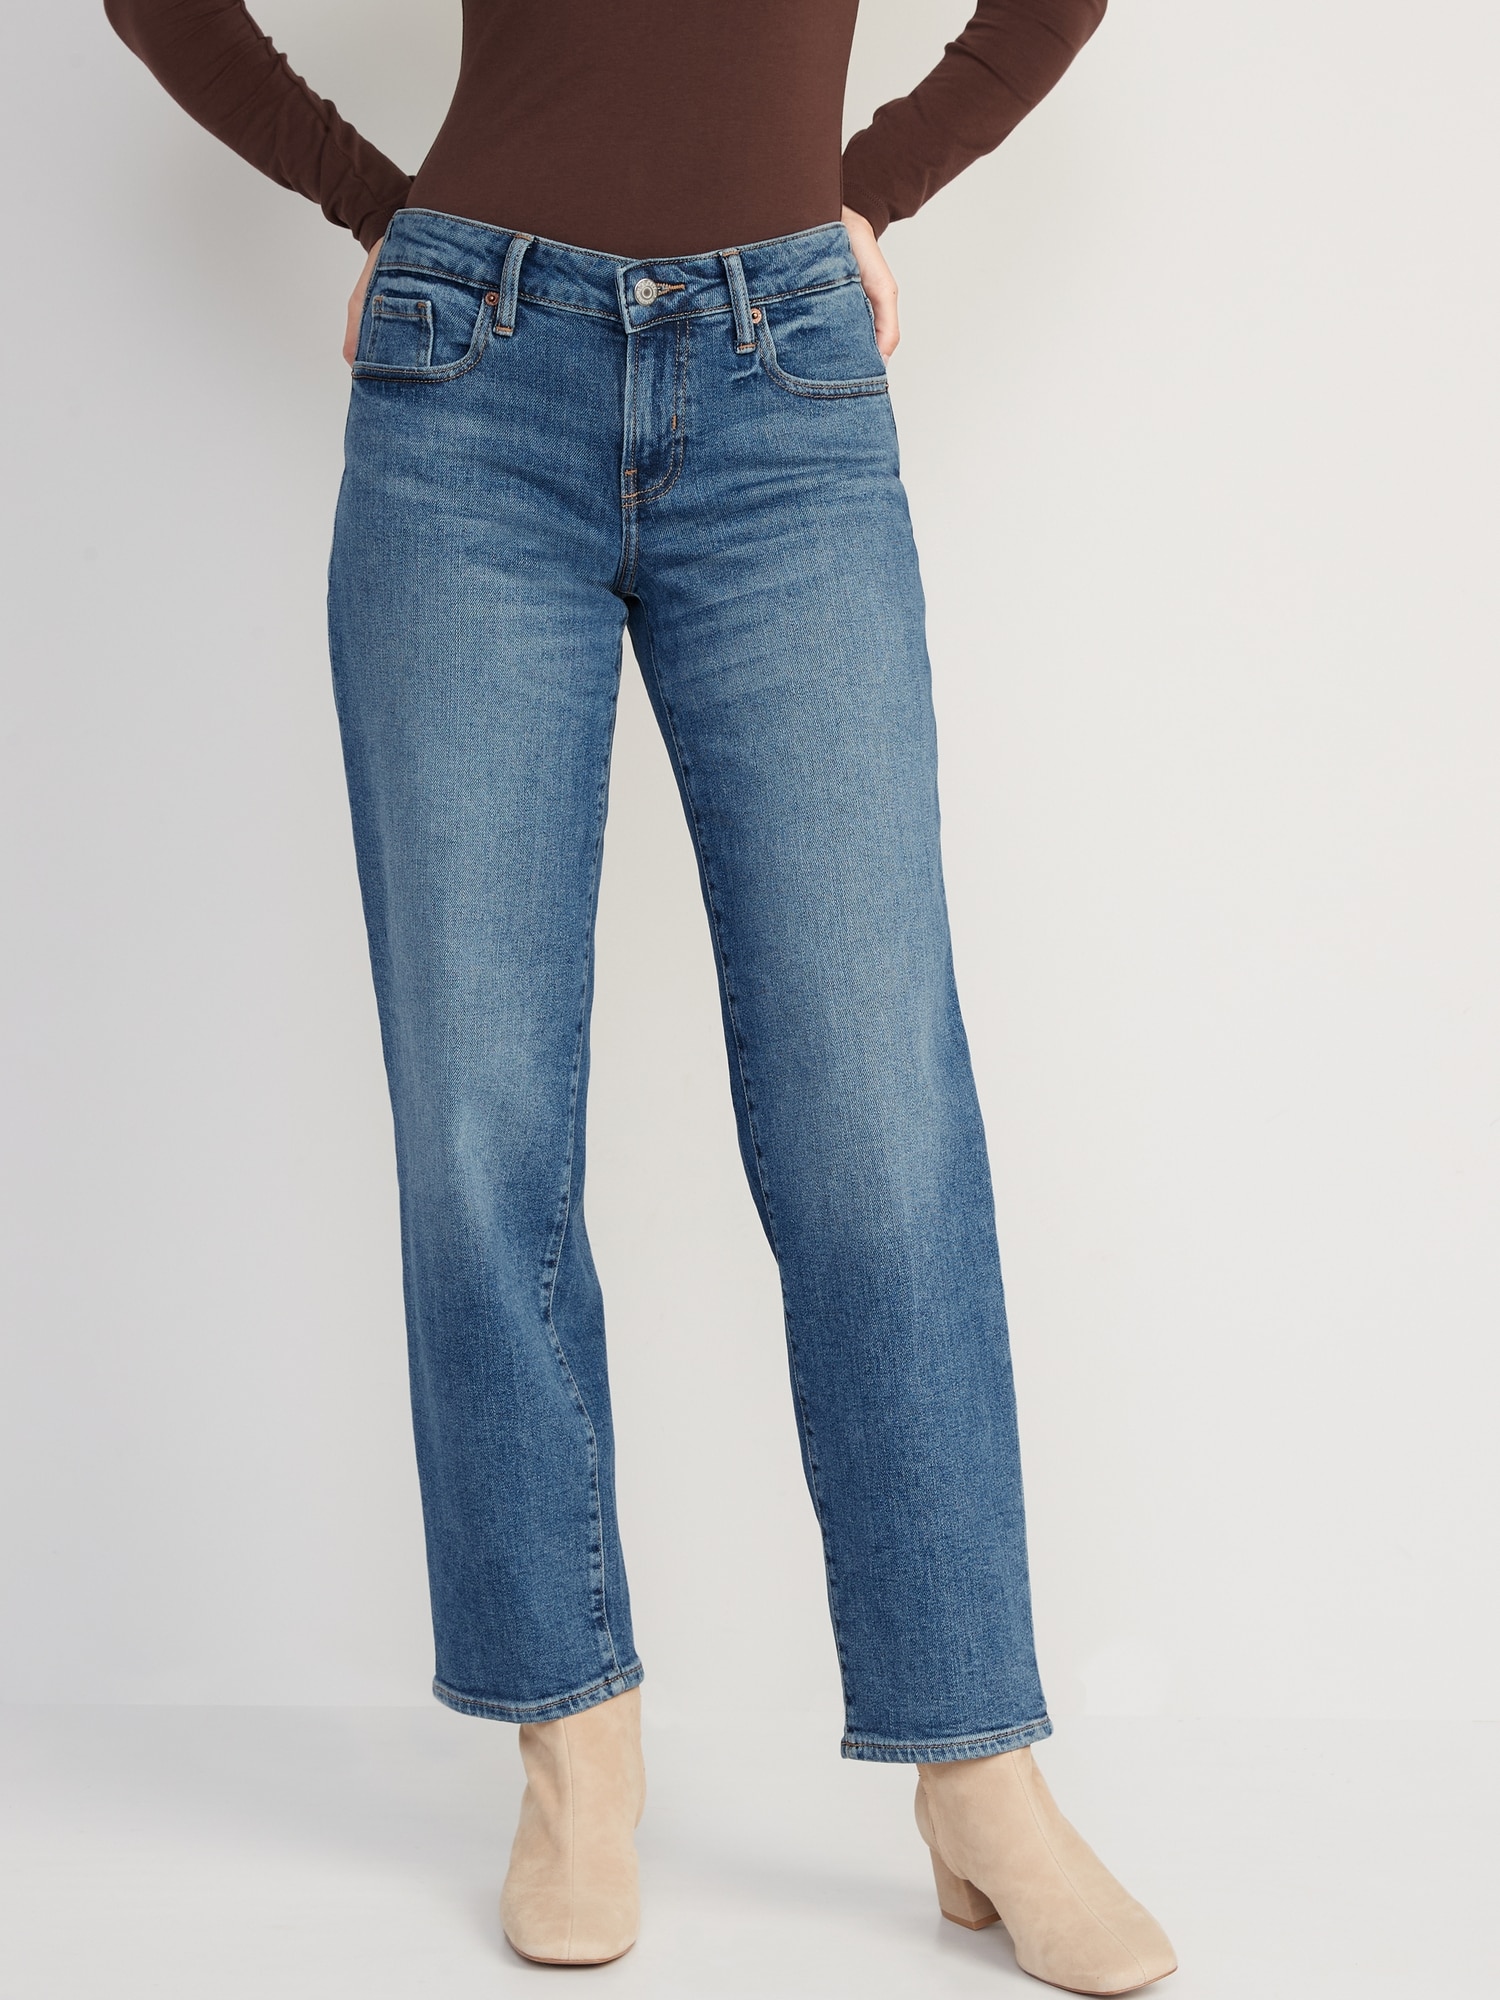 Old Navy Low-Rise OG Loose Jeans for Women blue. 1